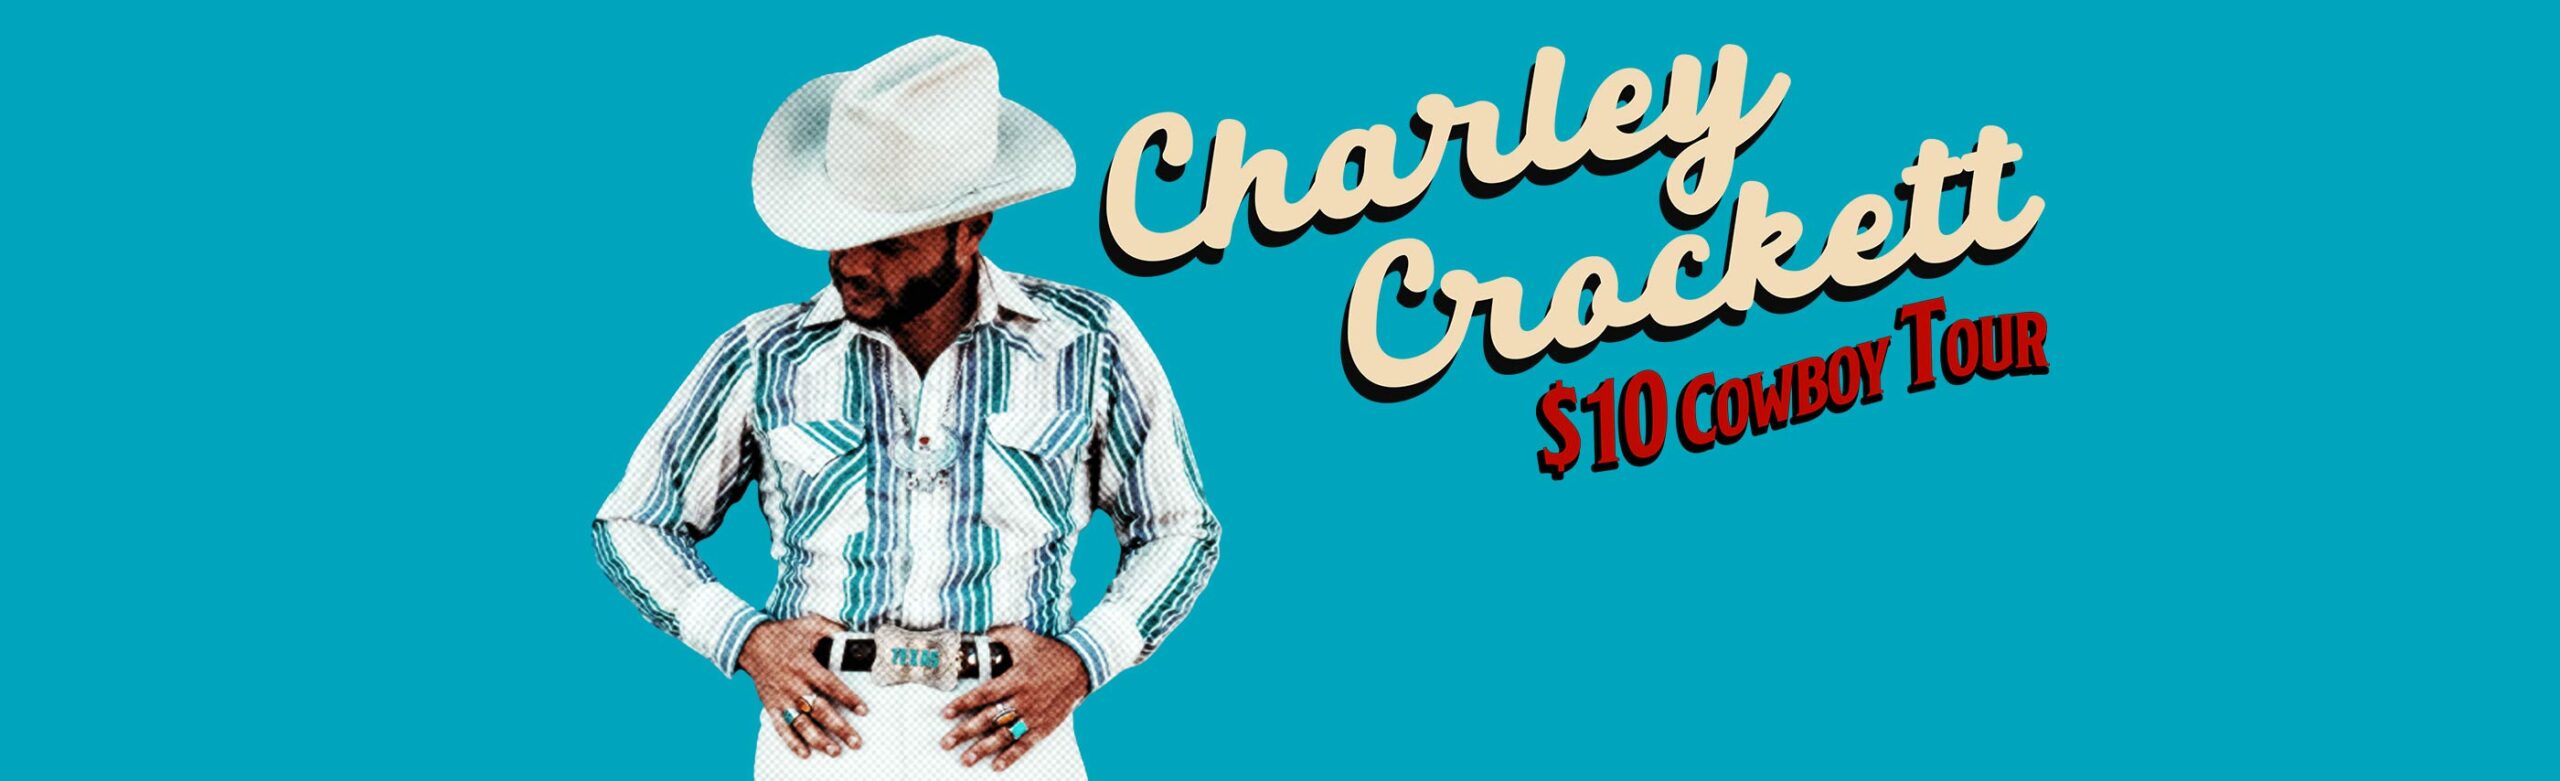 Charley Crockett Announces $10 Cowboy Tour Date at KettleHouse Amphitheater Image